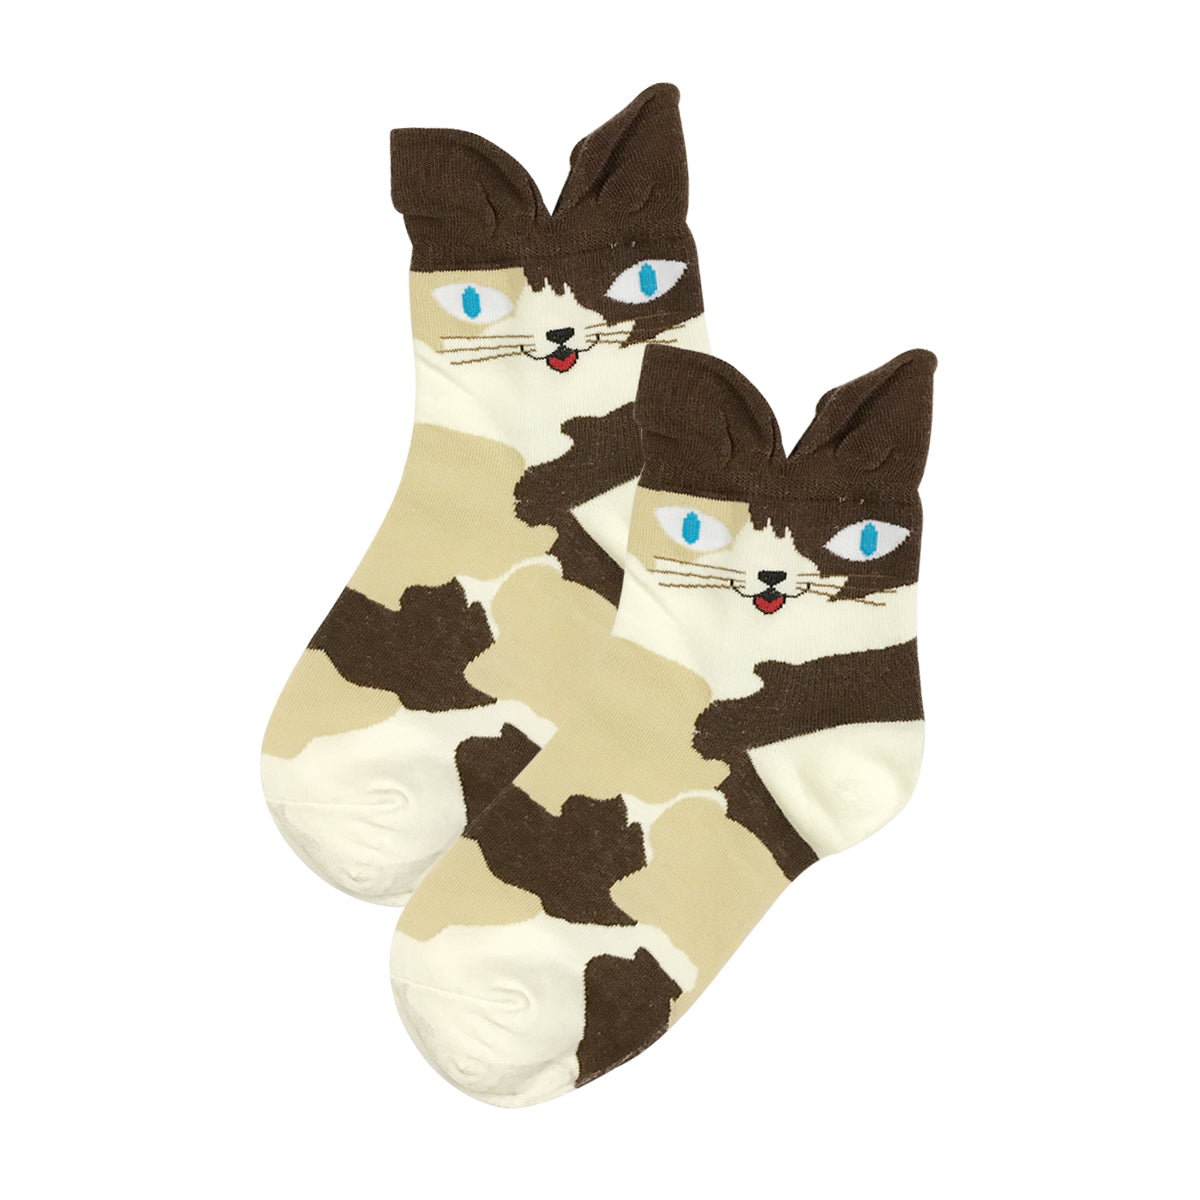 Wrapables Novelty Animal Print Crew Socks (Set of 5)